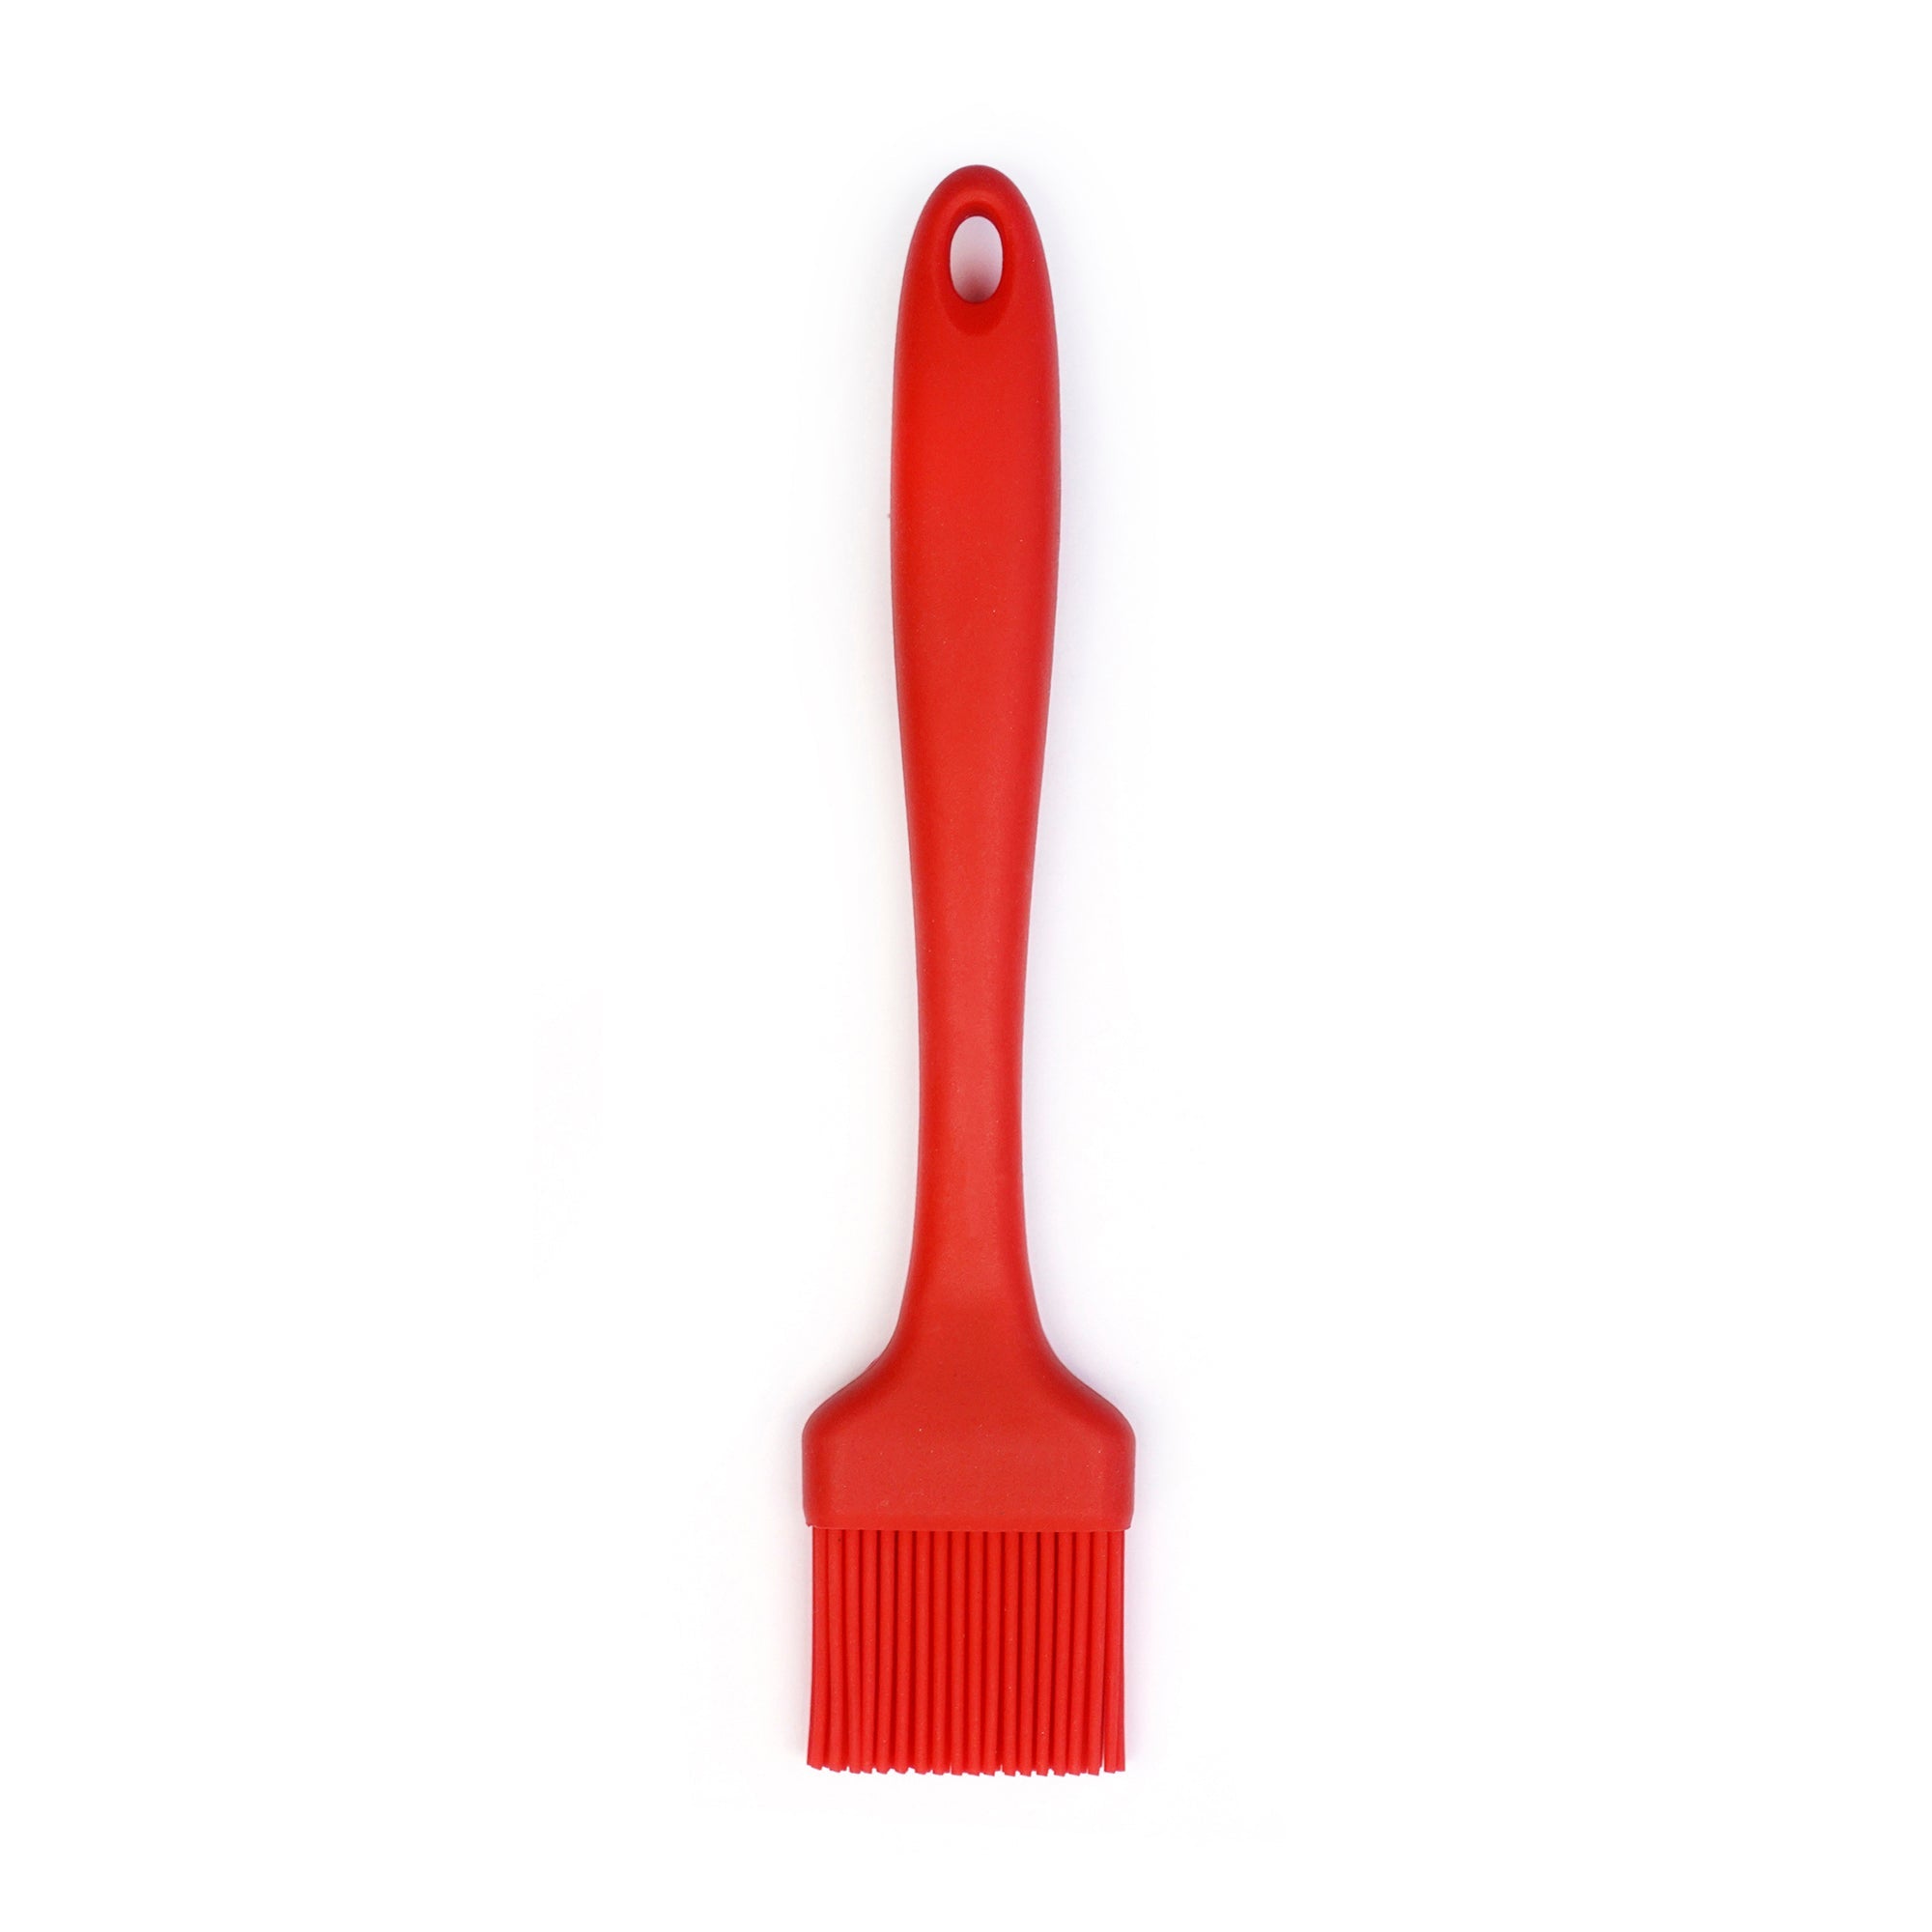 Cocinaware Red Silicone Basting Brush